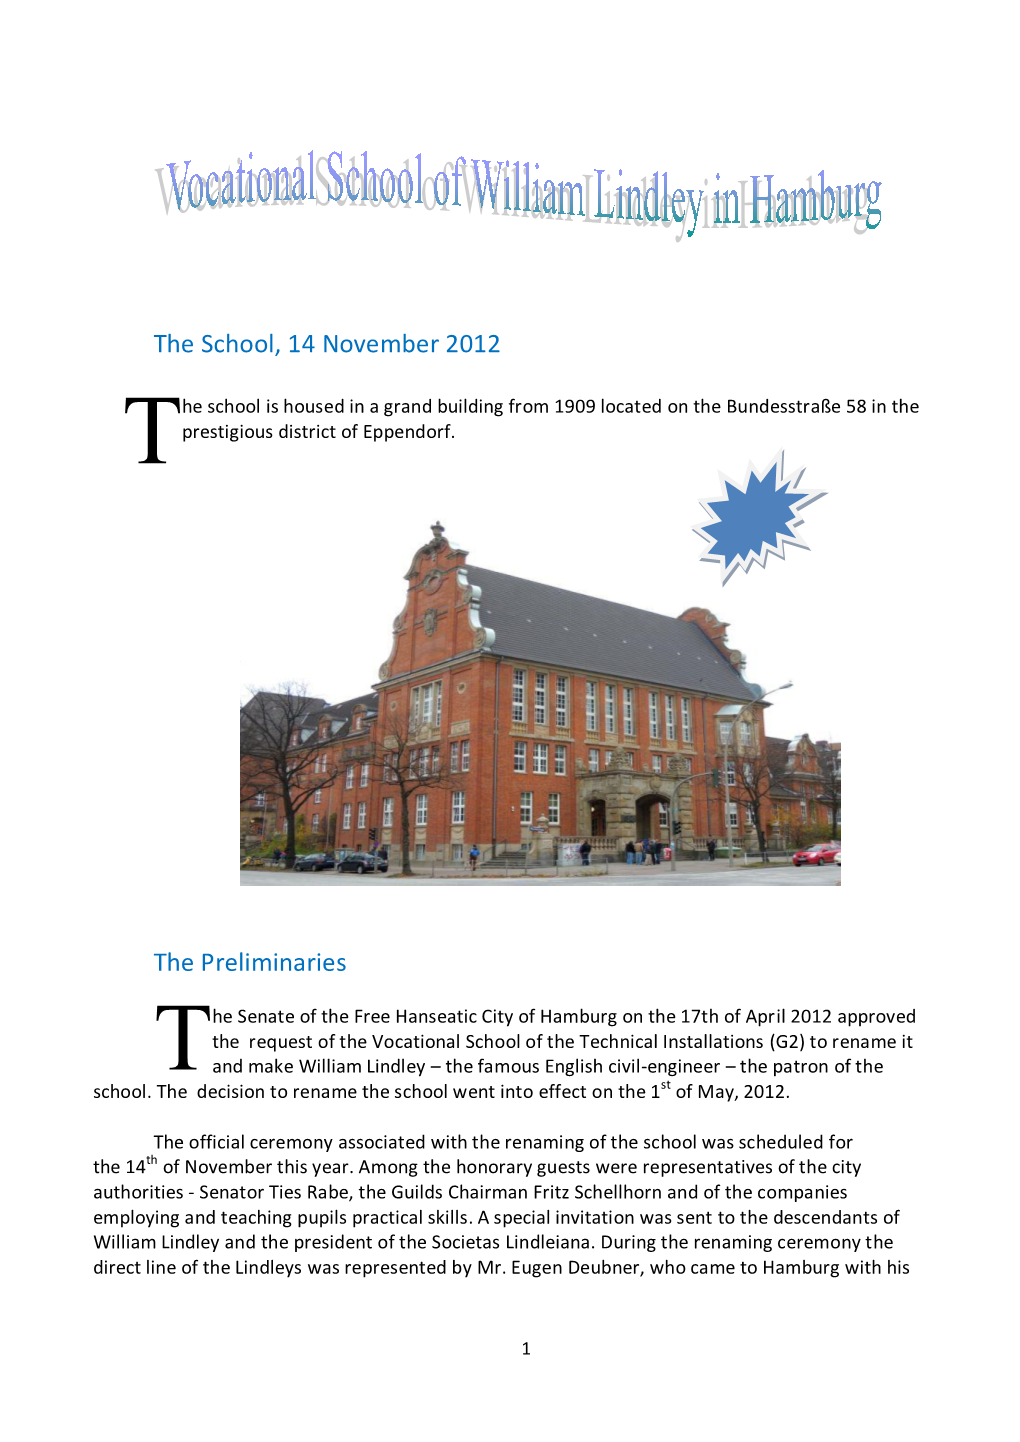 The School, 14 November 2012 the Preliminaries